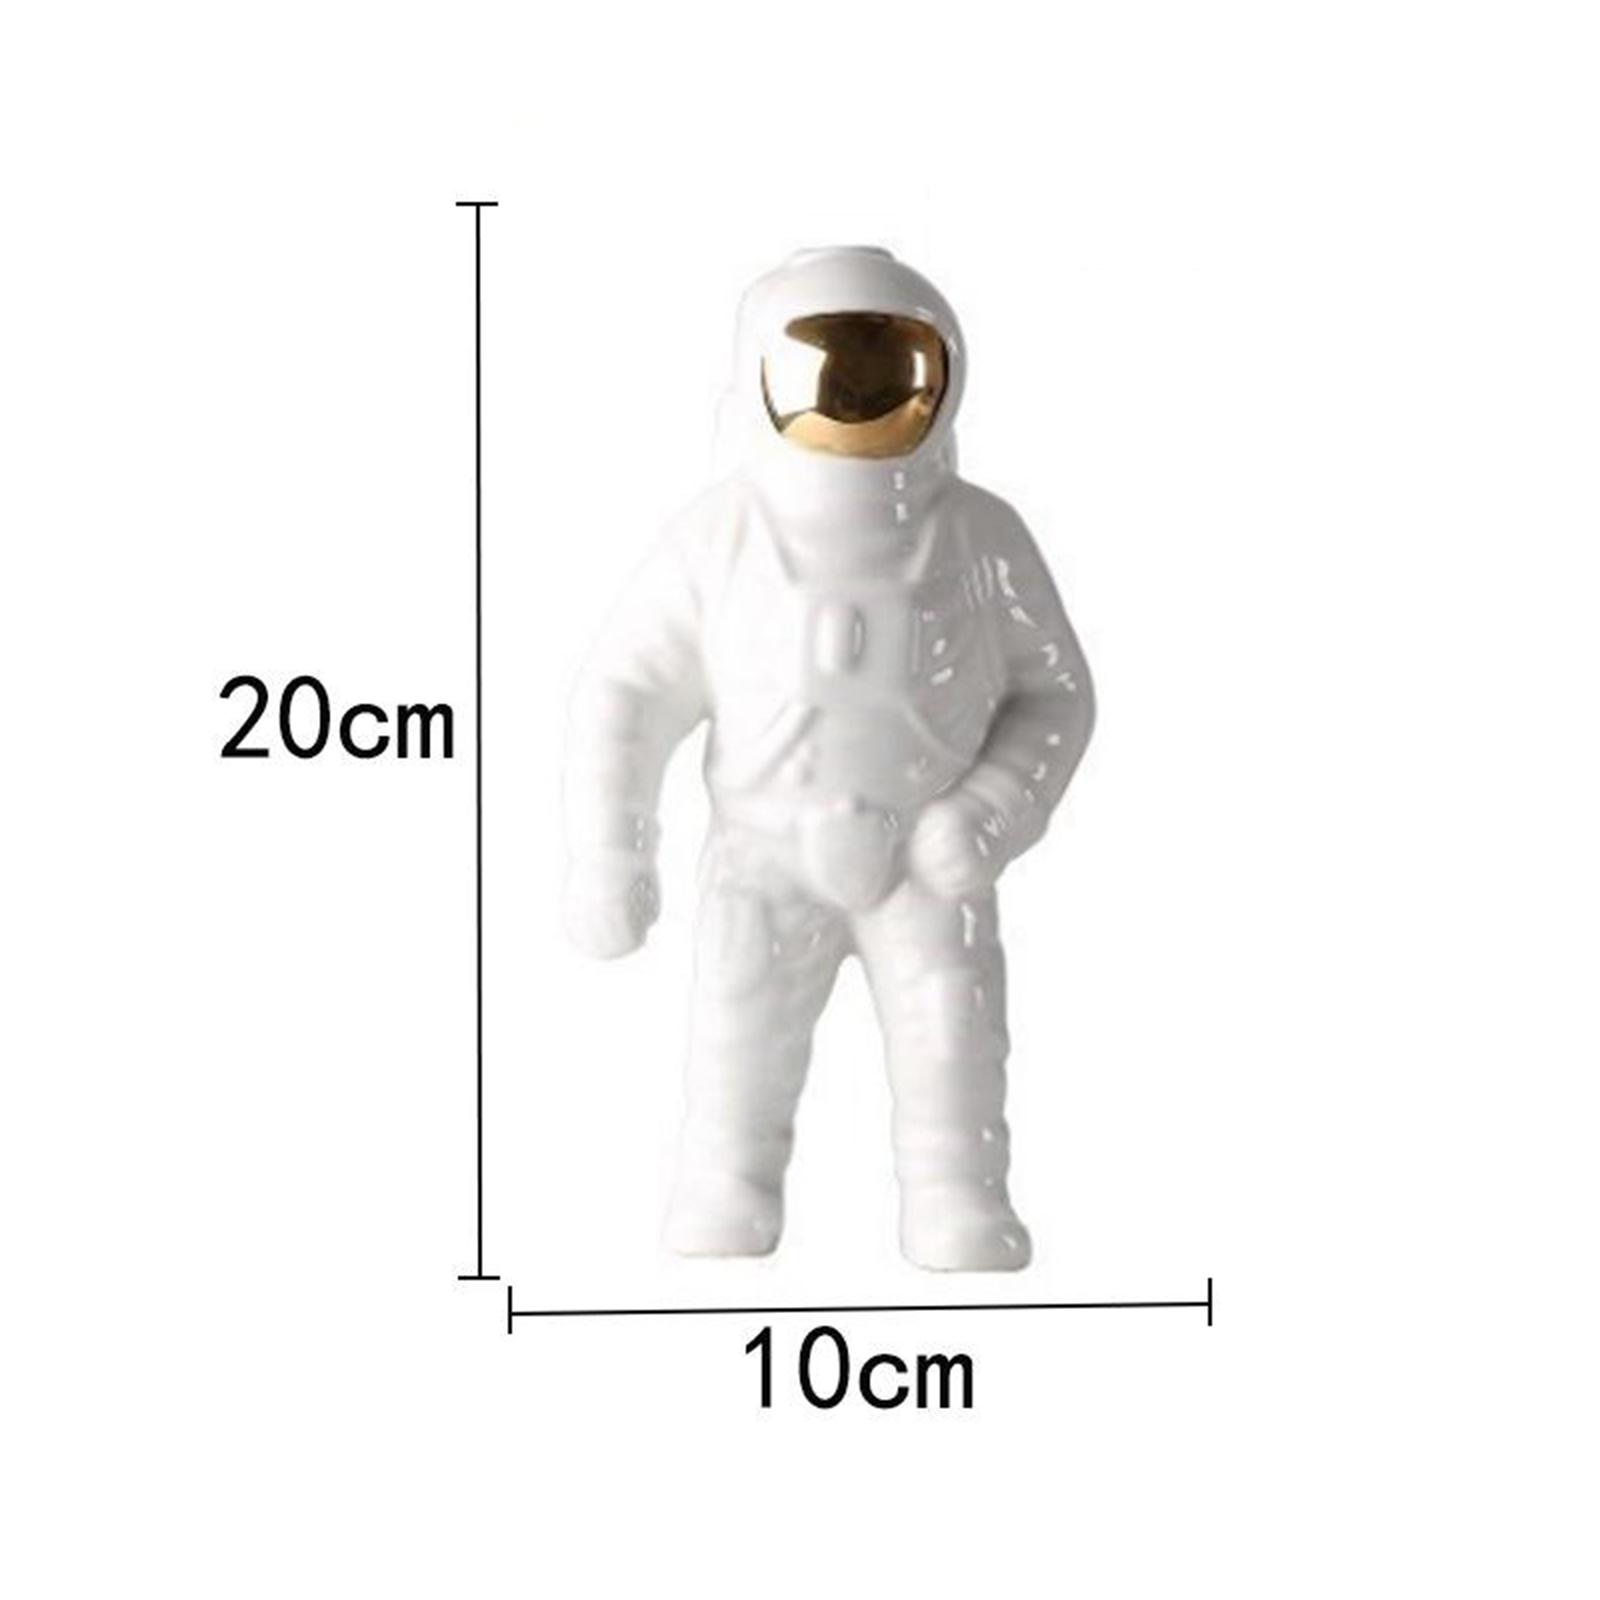 Astronaut Model Figure Ceramic Cosmonaut Statue Space Man Sculpture Fashion Creative Office Home Desktop Decor Art Ornaments